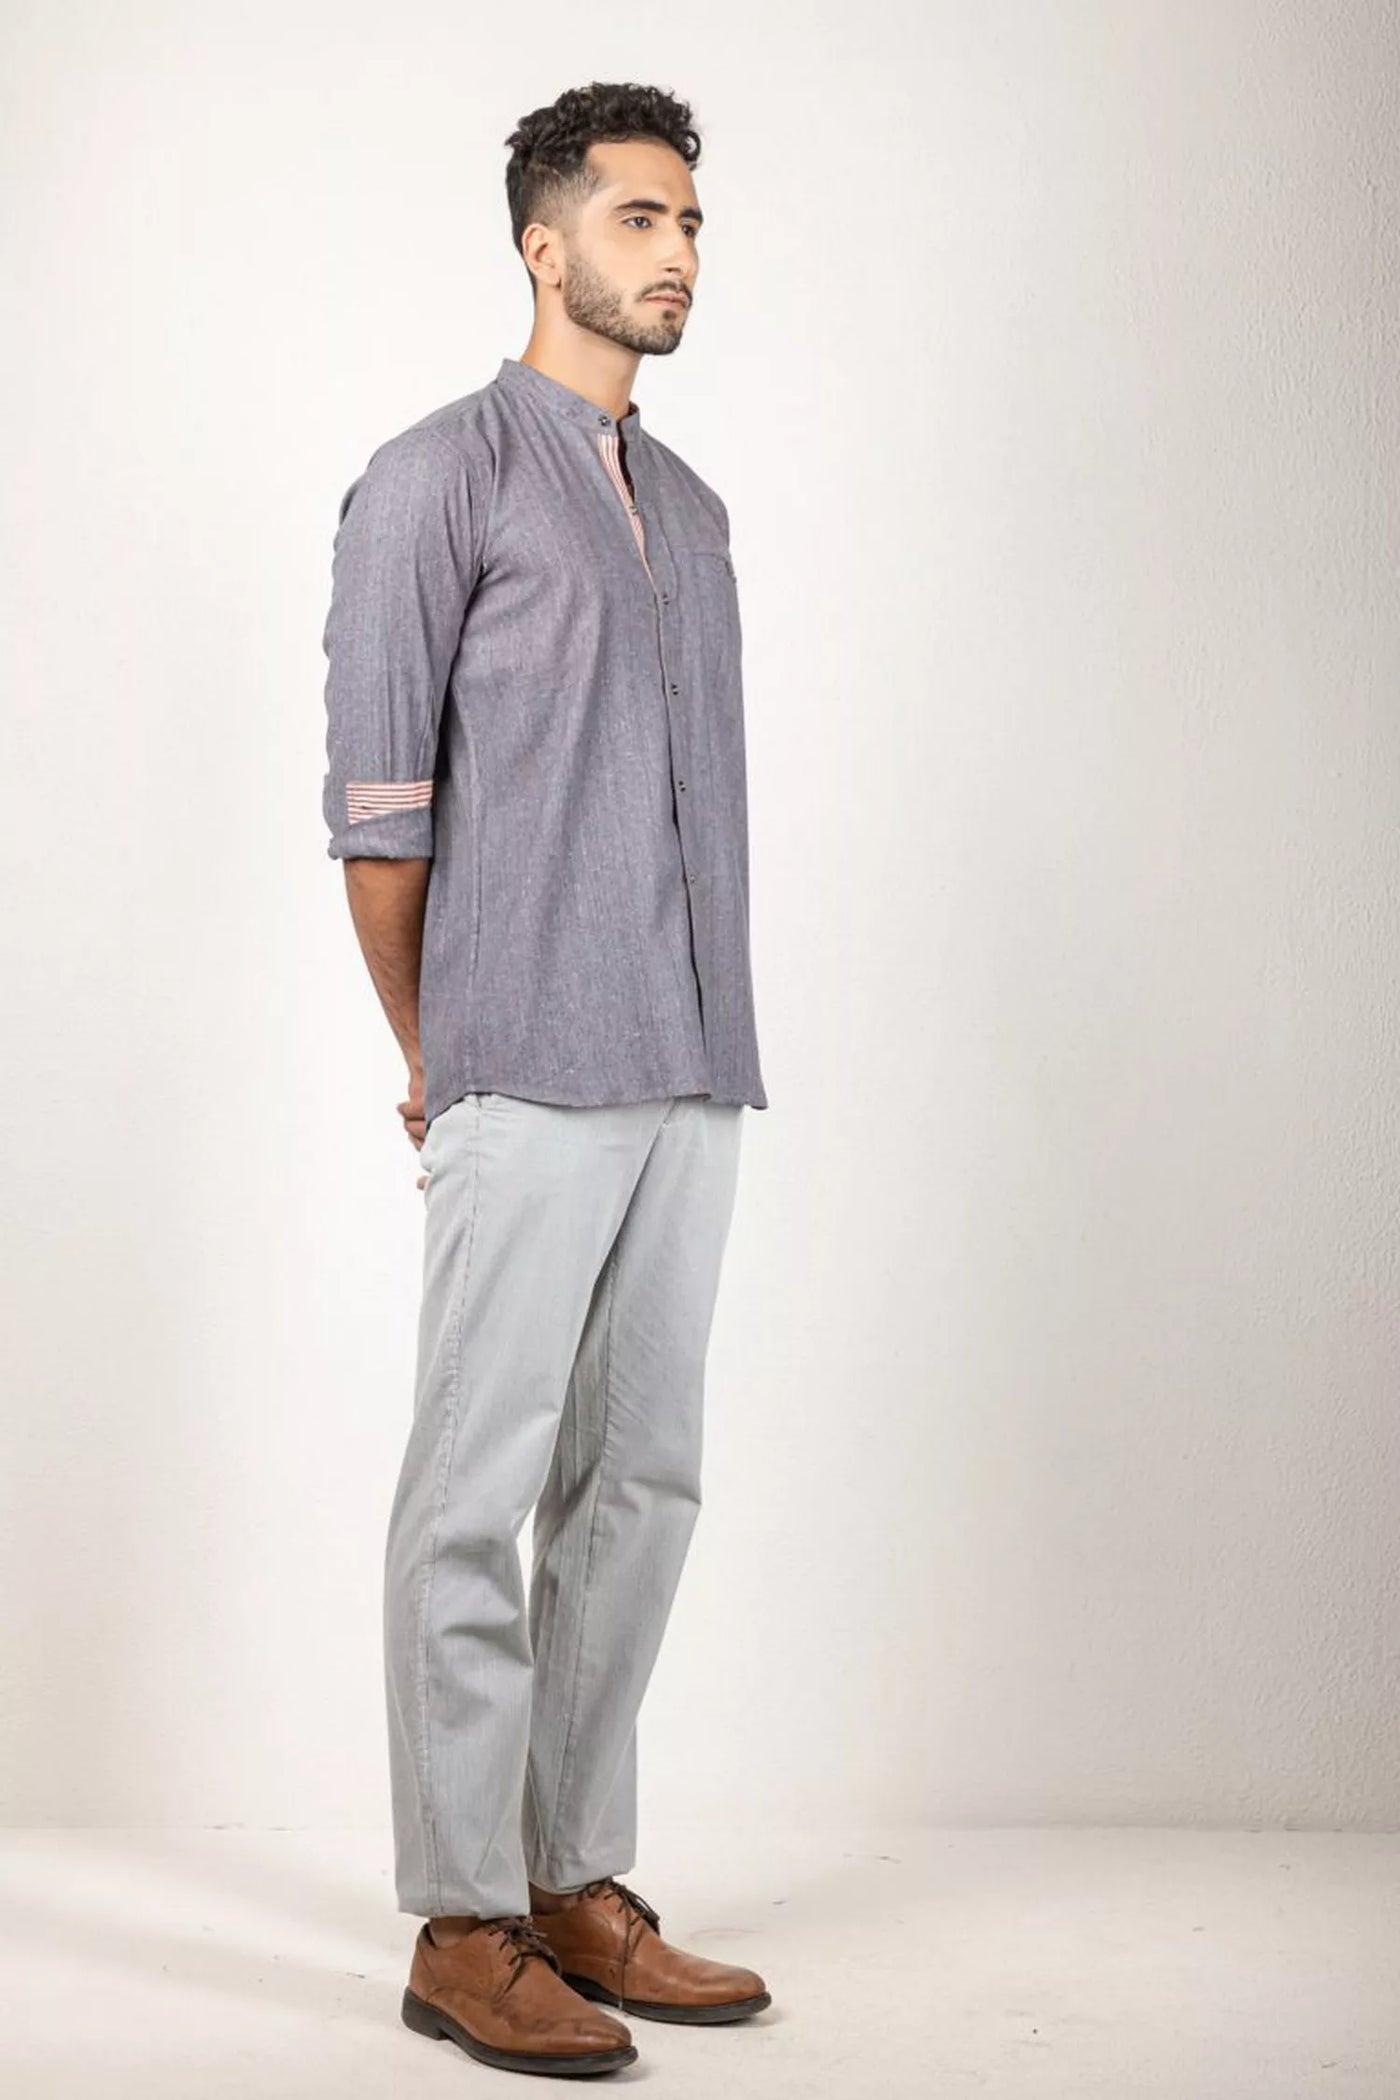 Two-Tone Yarn Dyed Grey Shirt - 100% Cotton